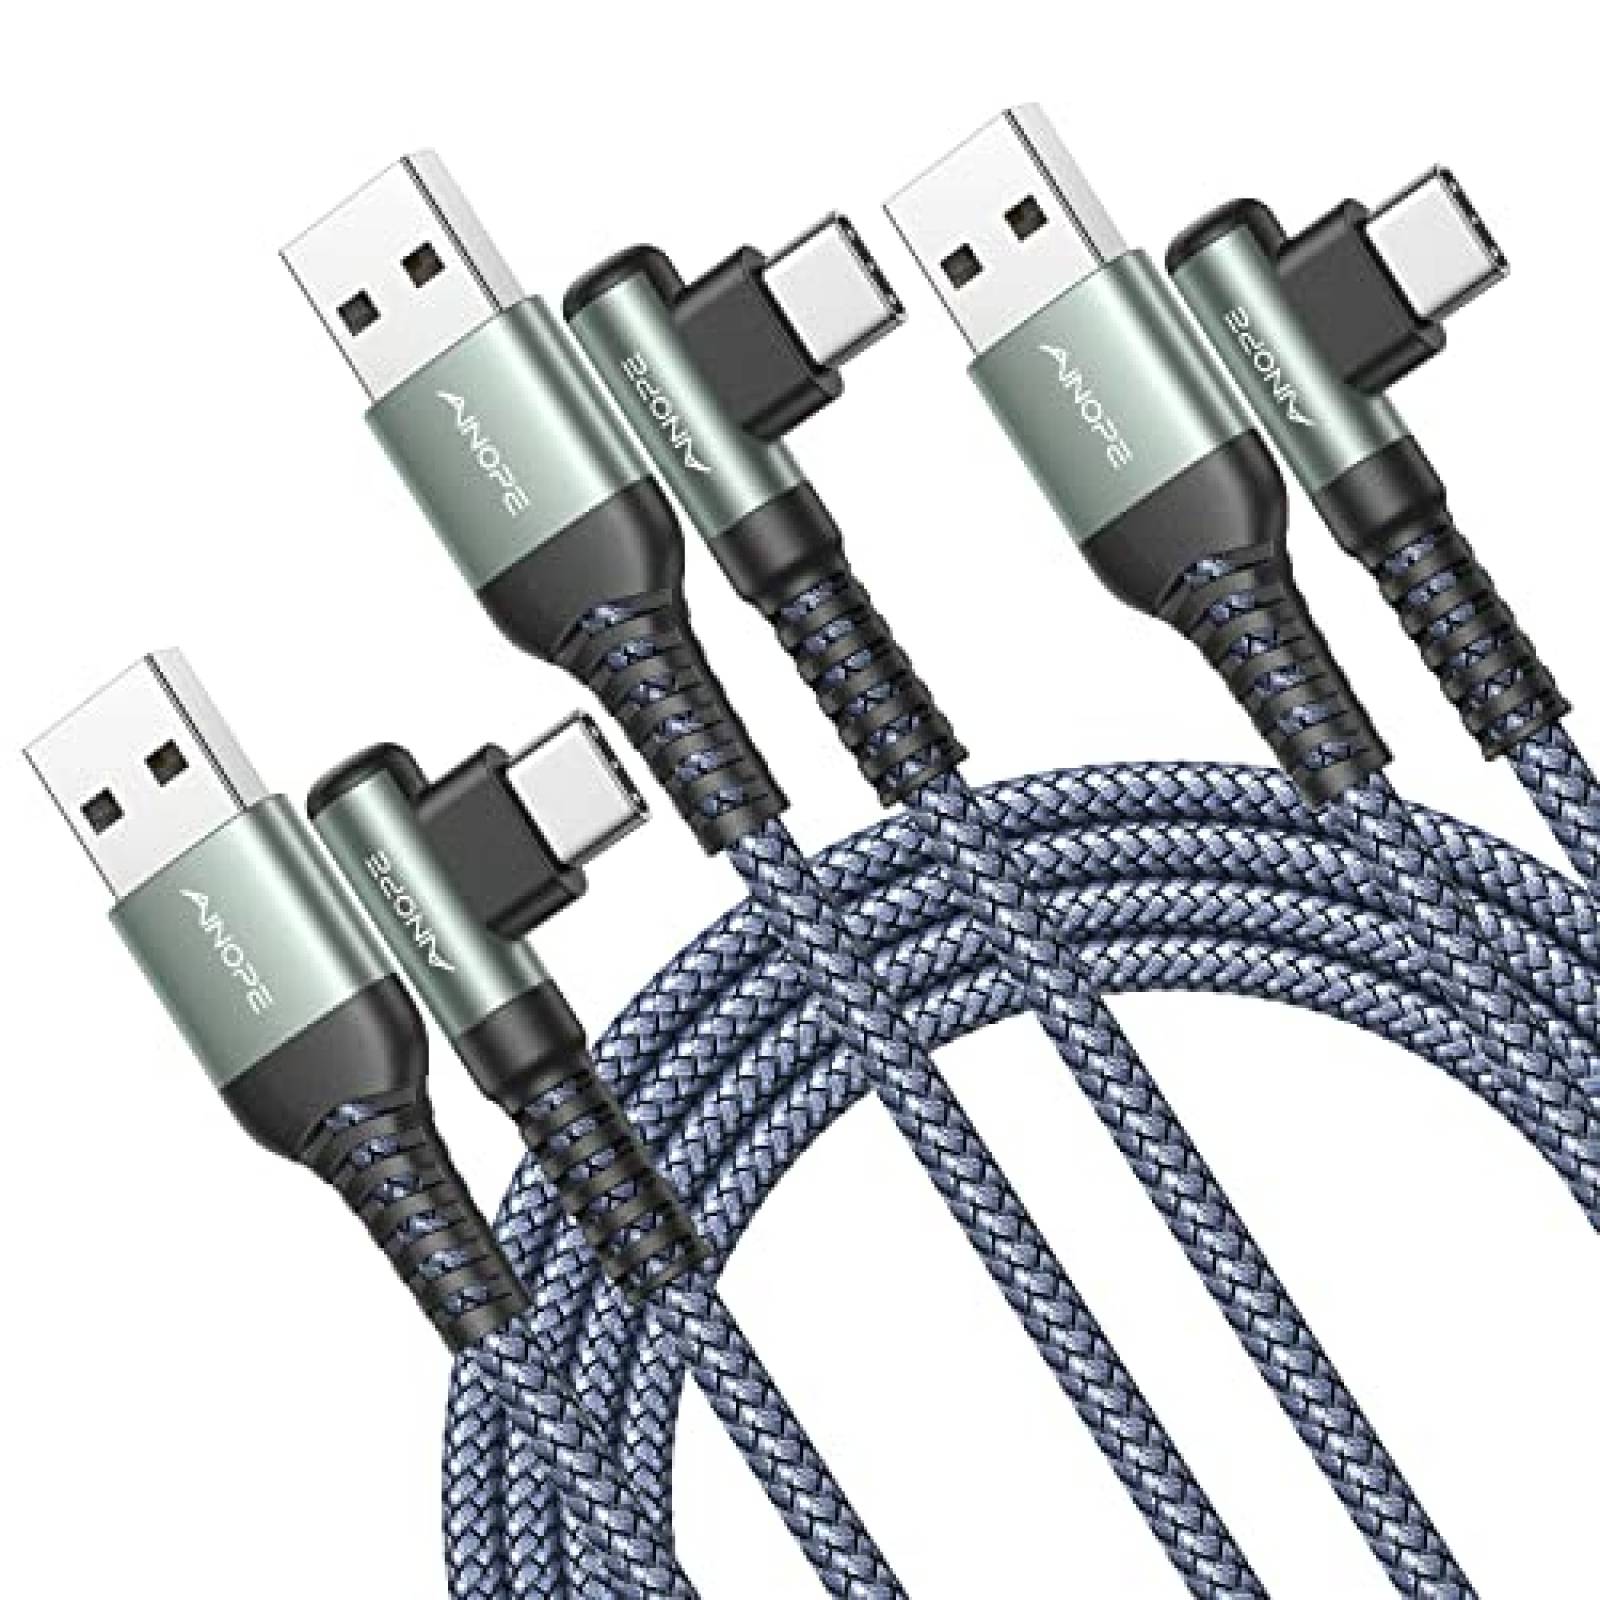  etguuds Cable USB C a USB C de 6 pies, cable de carga rápida de  60 W/3 A, cable de carga tipo C a tipo C compatible con Samsung Galaxy  S21/S21+